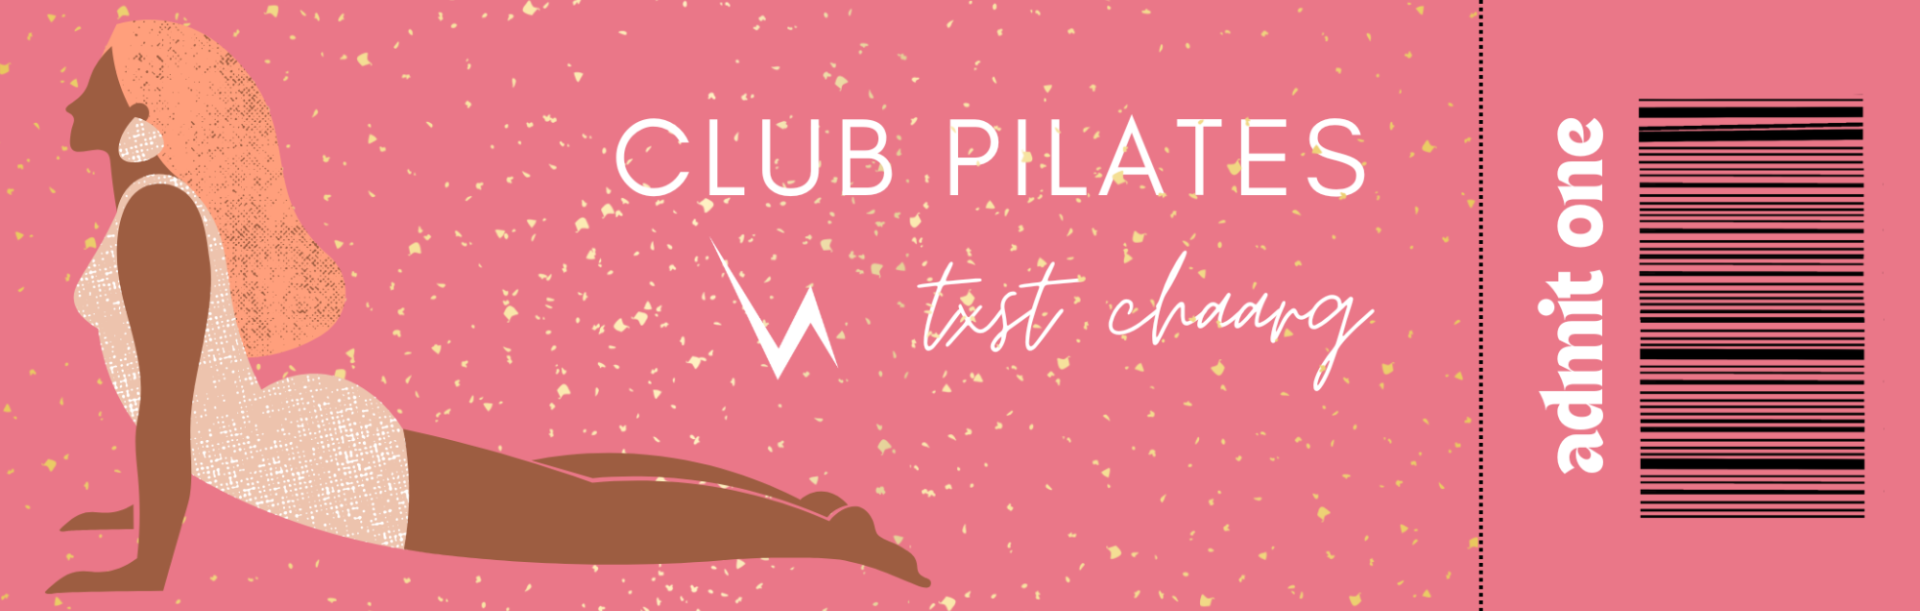 Pilates with Club Pilates